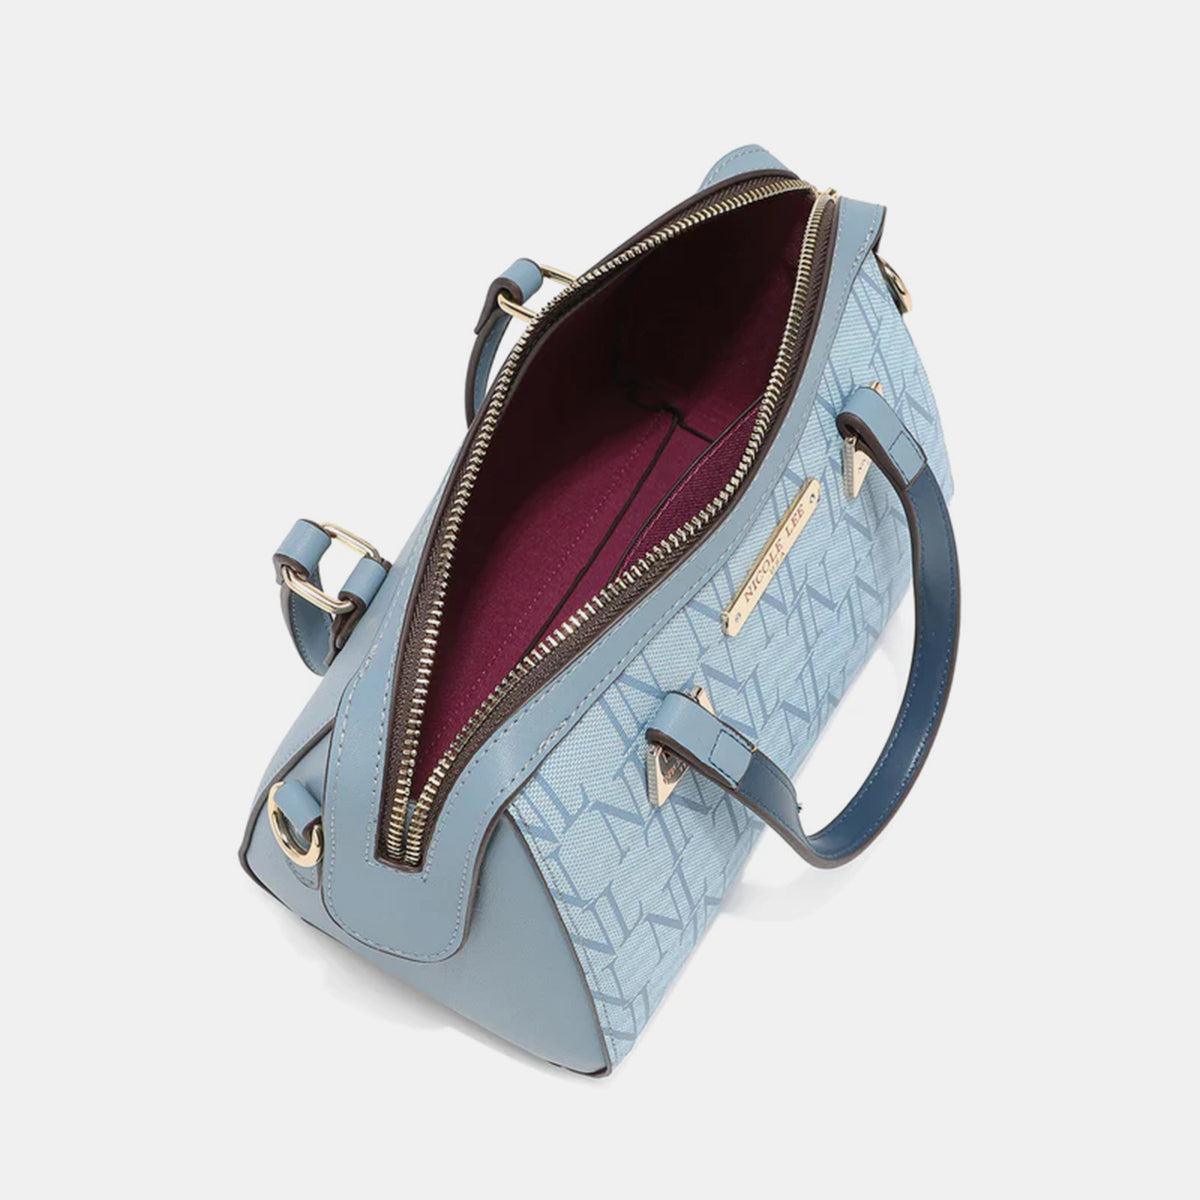 a blue handbag with a zippered compartment